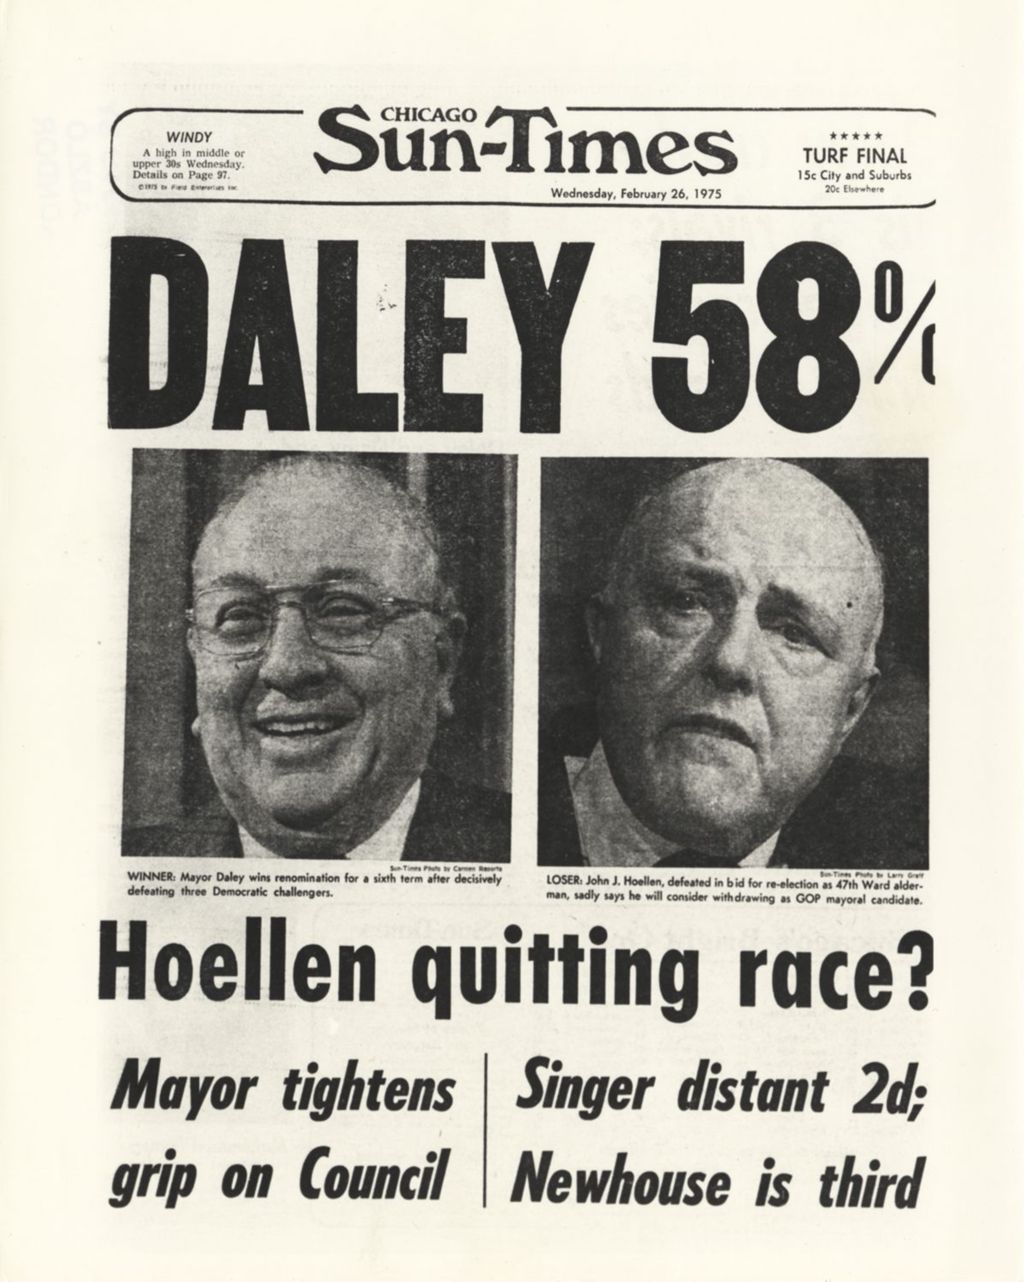 Miniature of Chicago Sun-Times headline "Daley 58%"